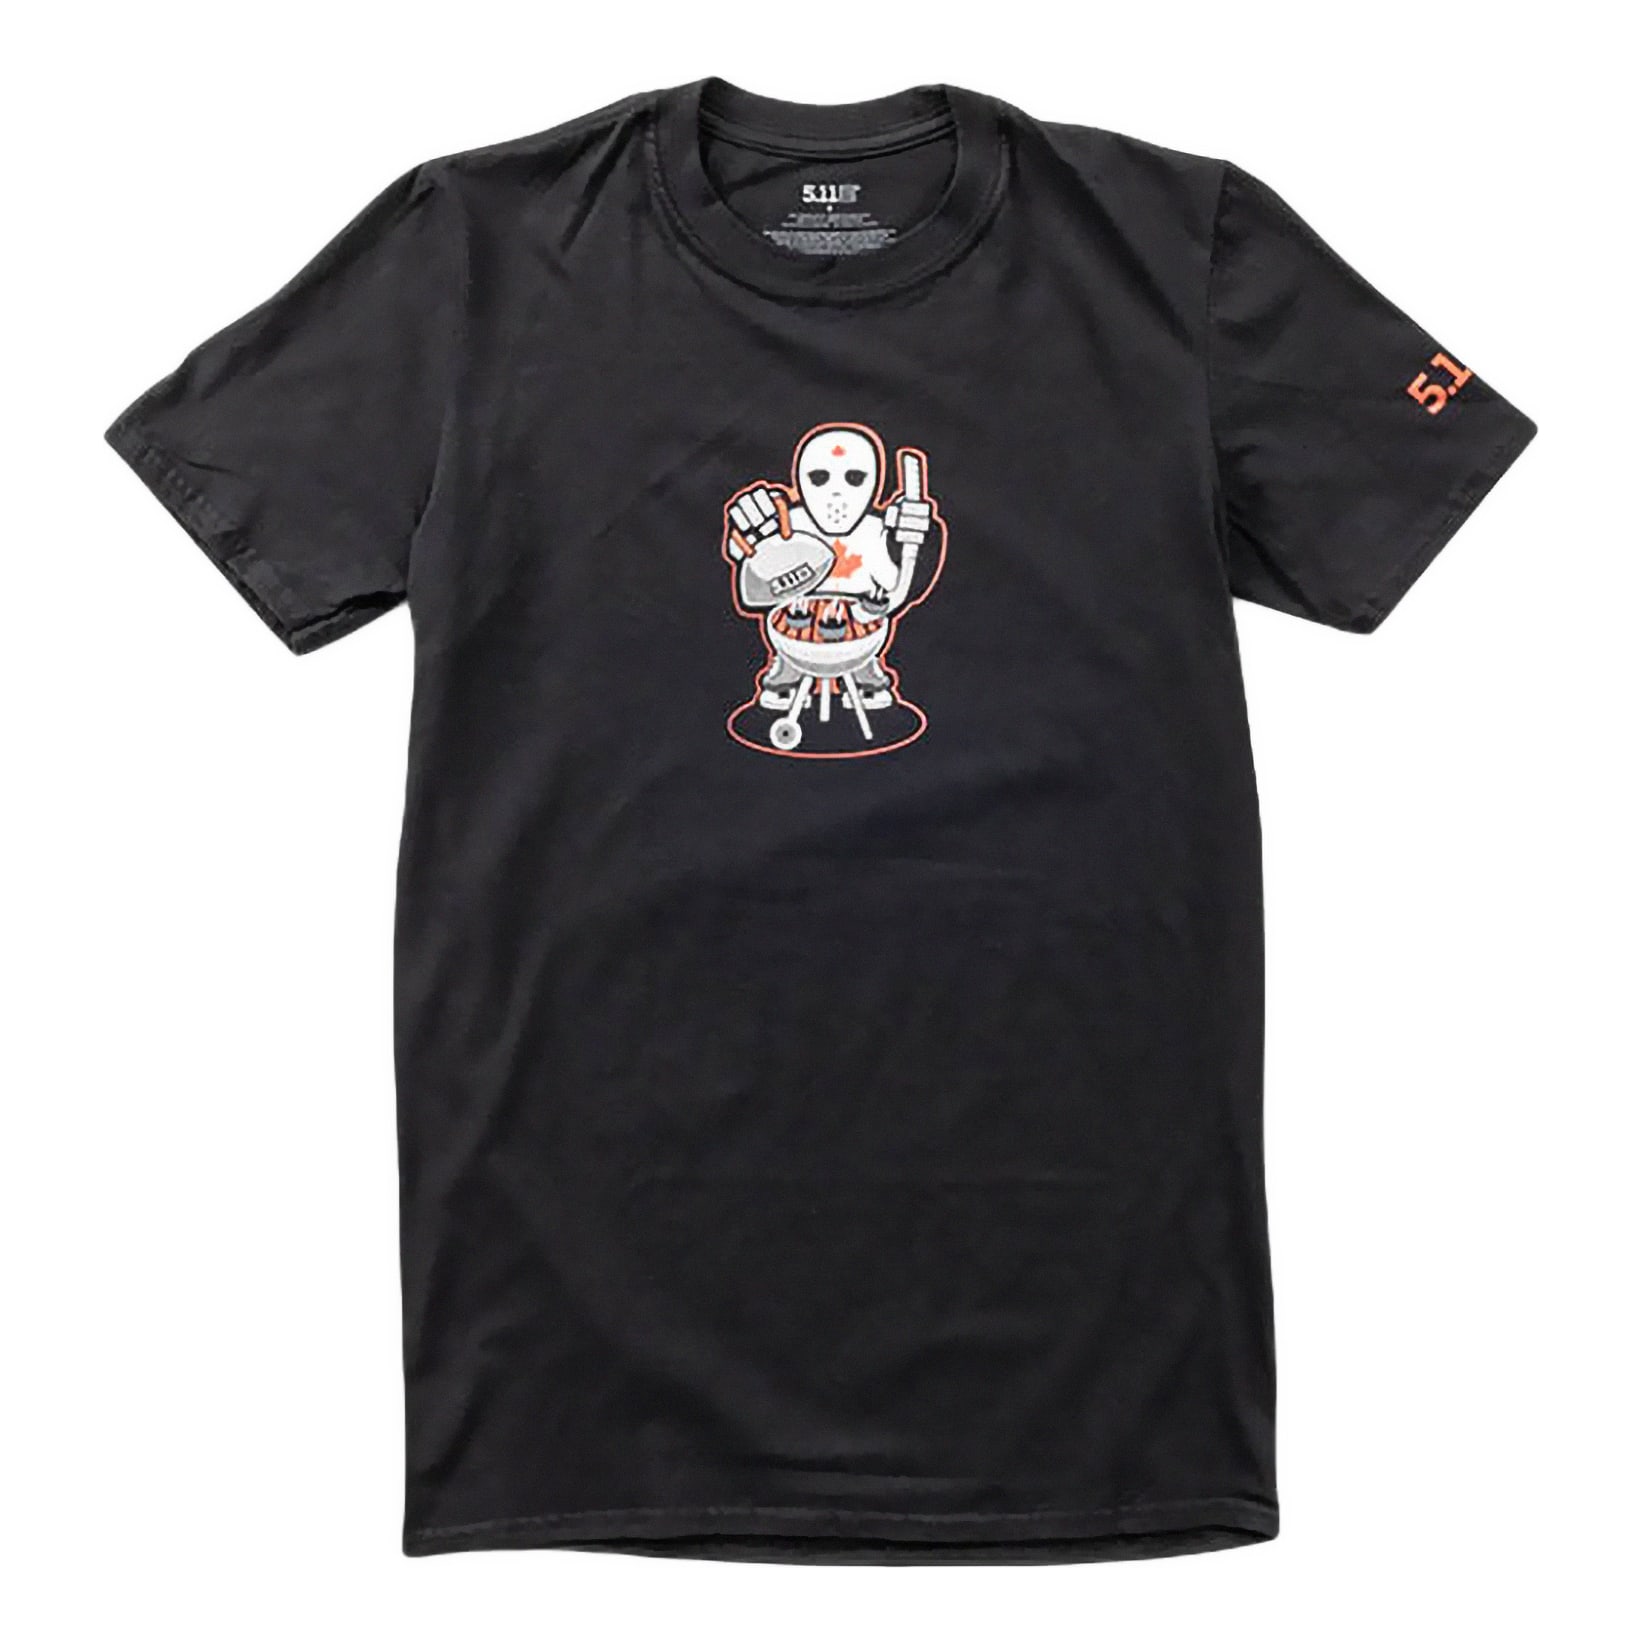 5.11® Men’s Hockey Puck BBQ Short-Sleeve T-Shirt - Black